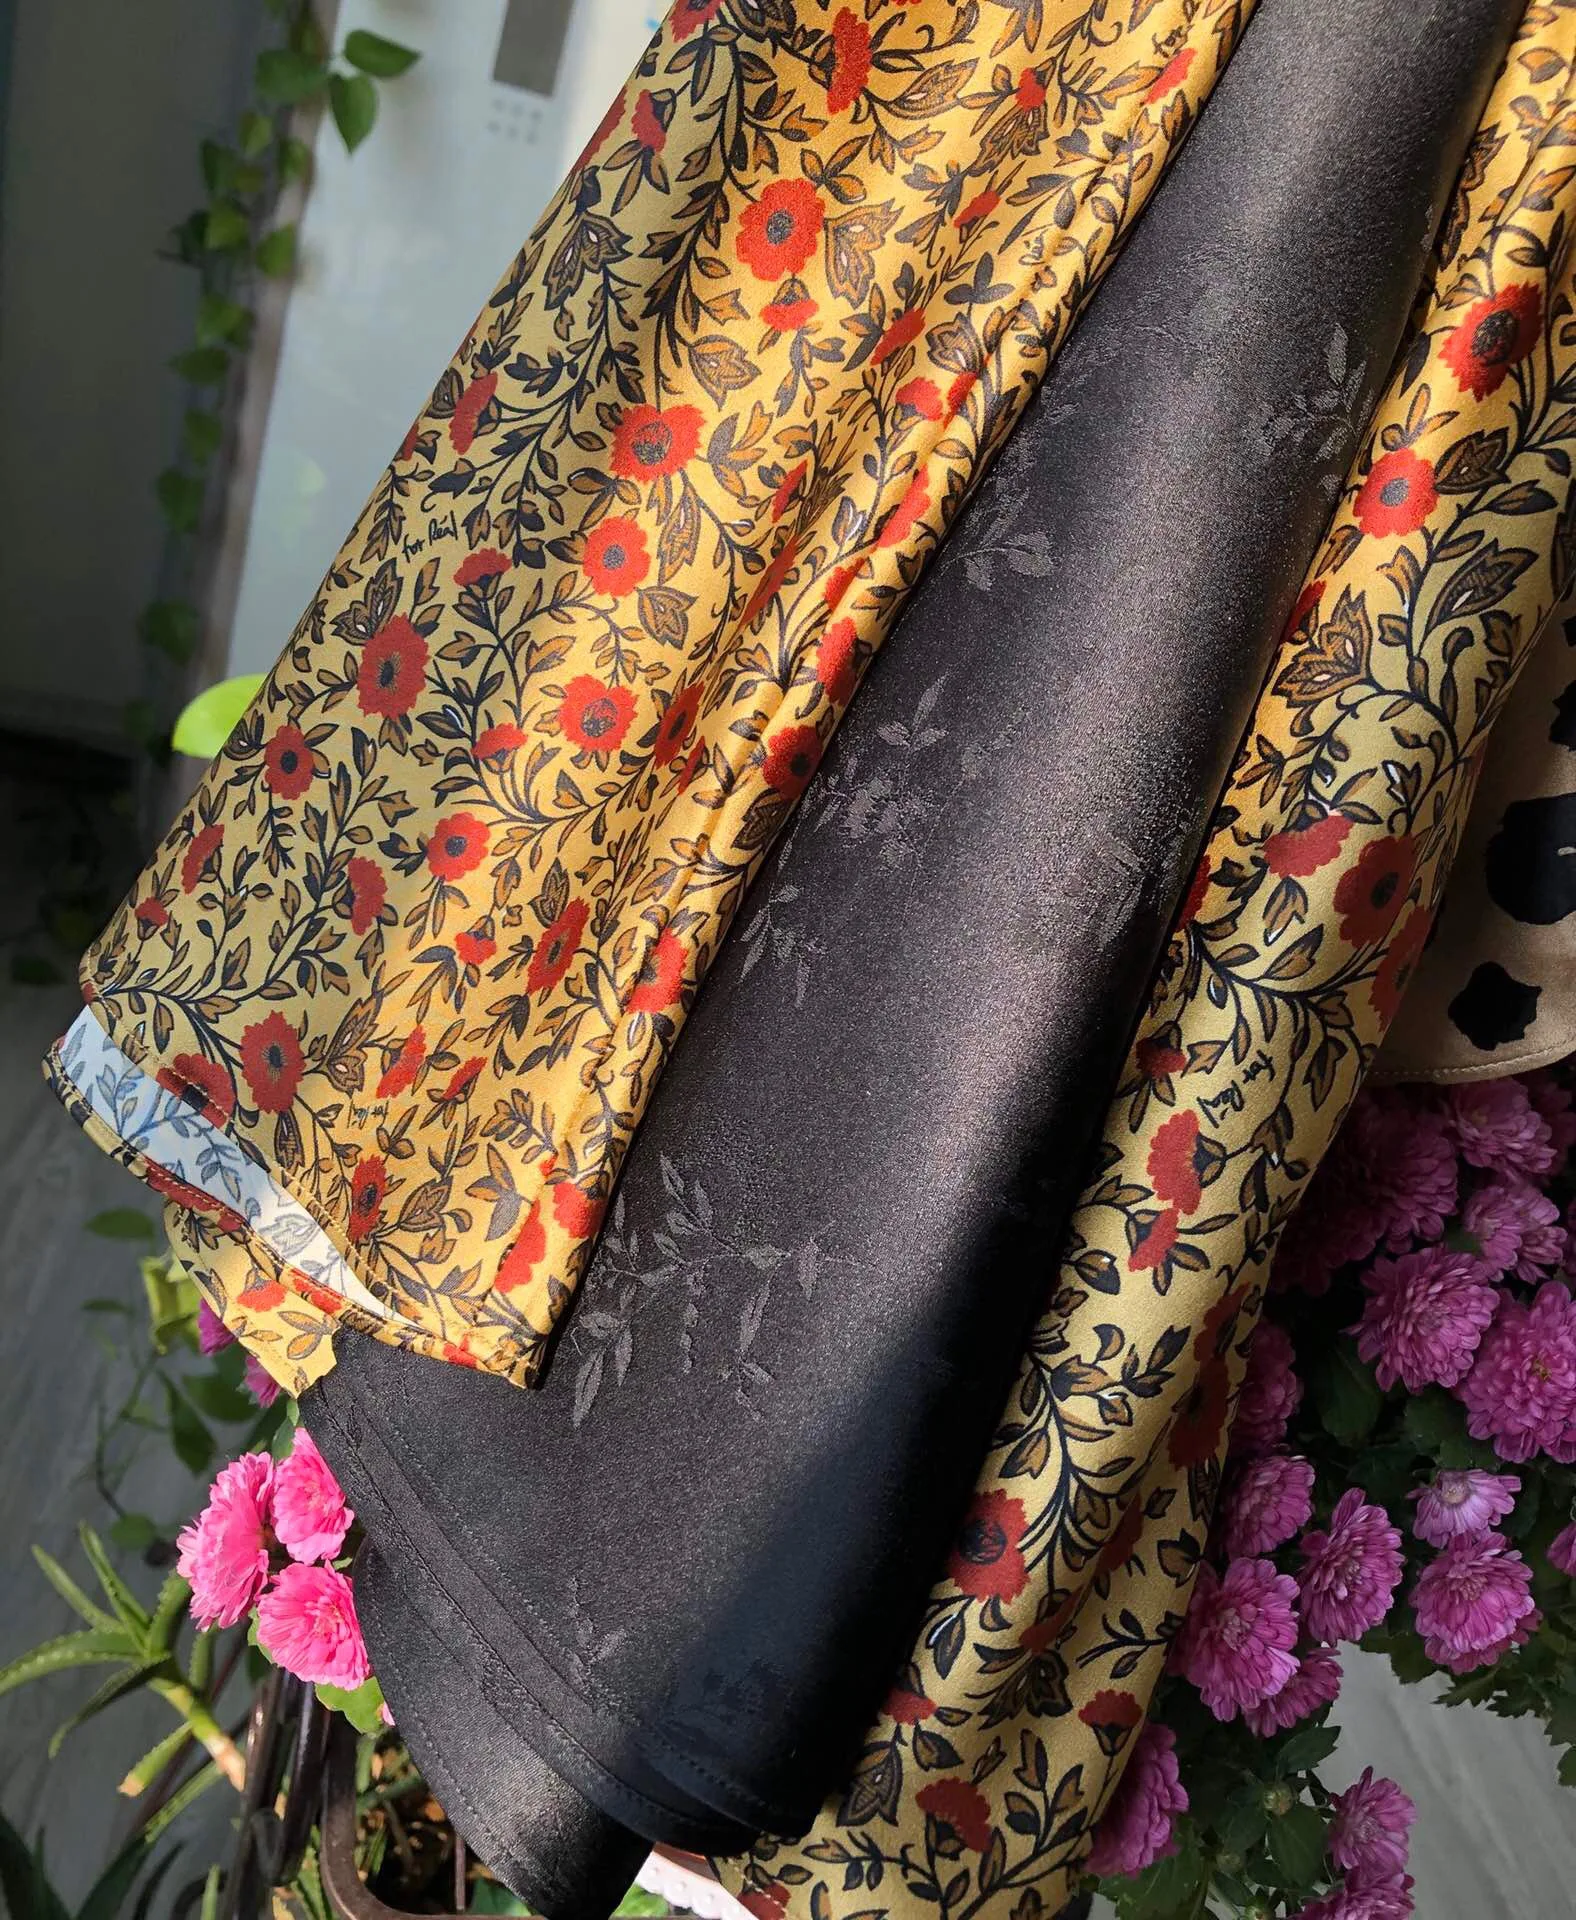 100% Silk Leopard Floral Printed Mini Skirt Women Fashion  Sweet Package Hip Short Skirts Holiday New 2022 Spring lululemon skirt Skirts